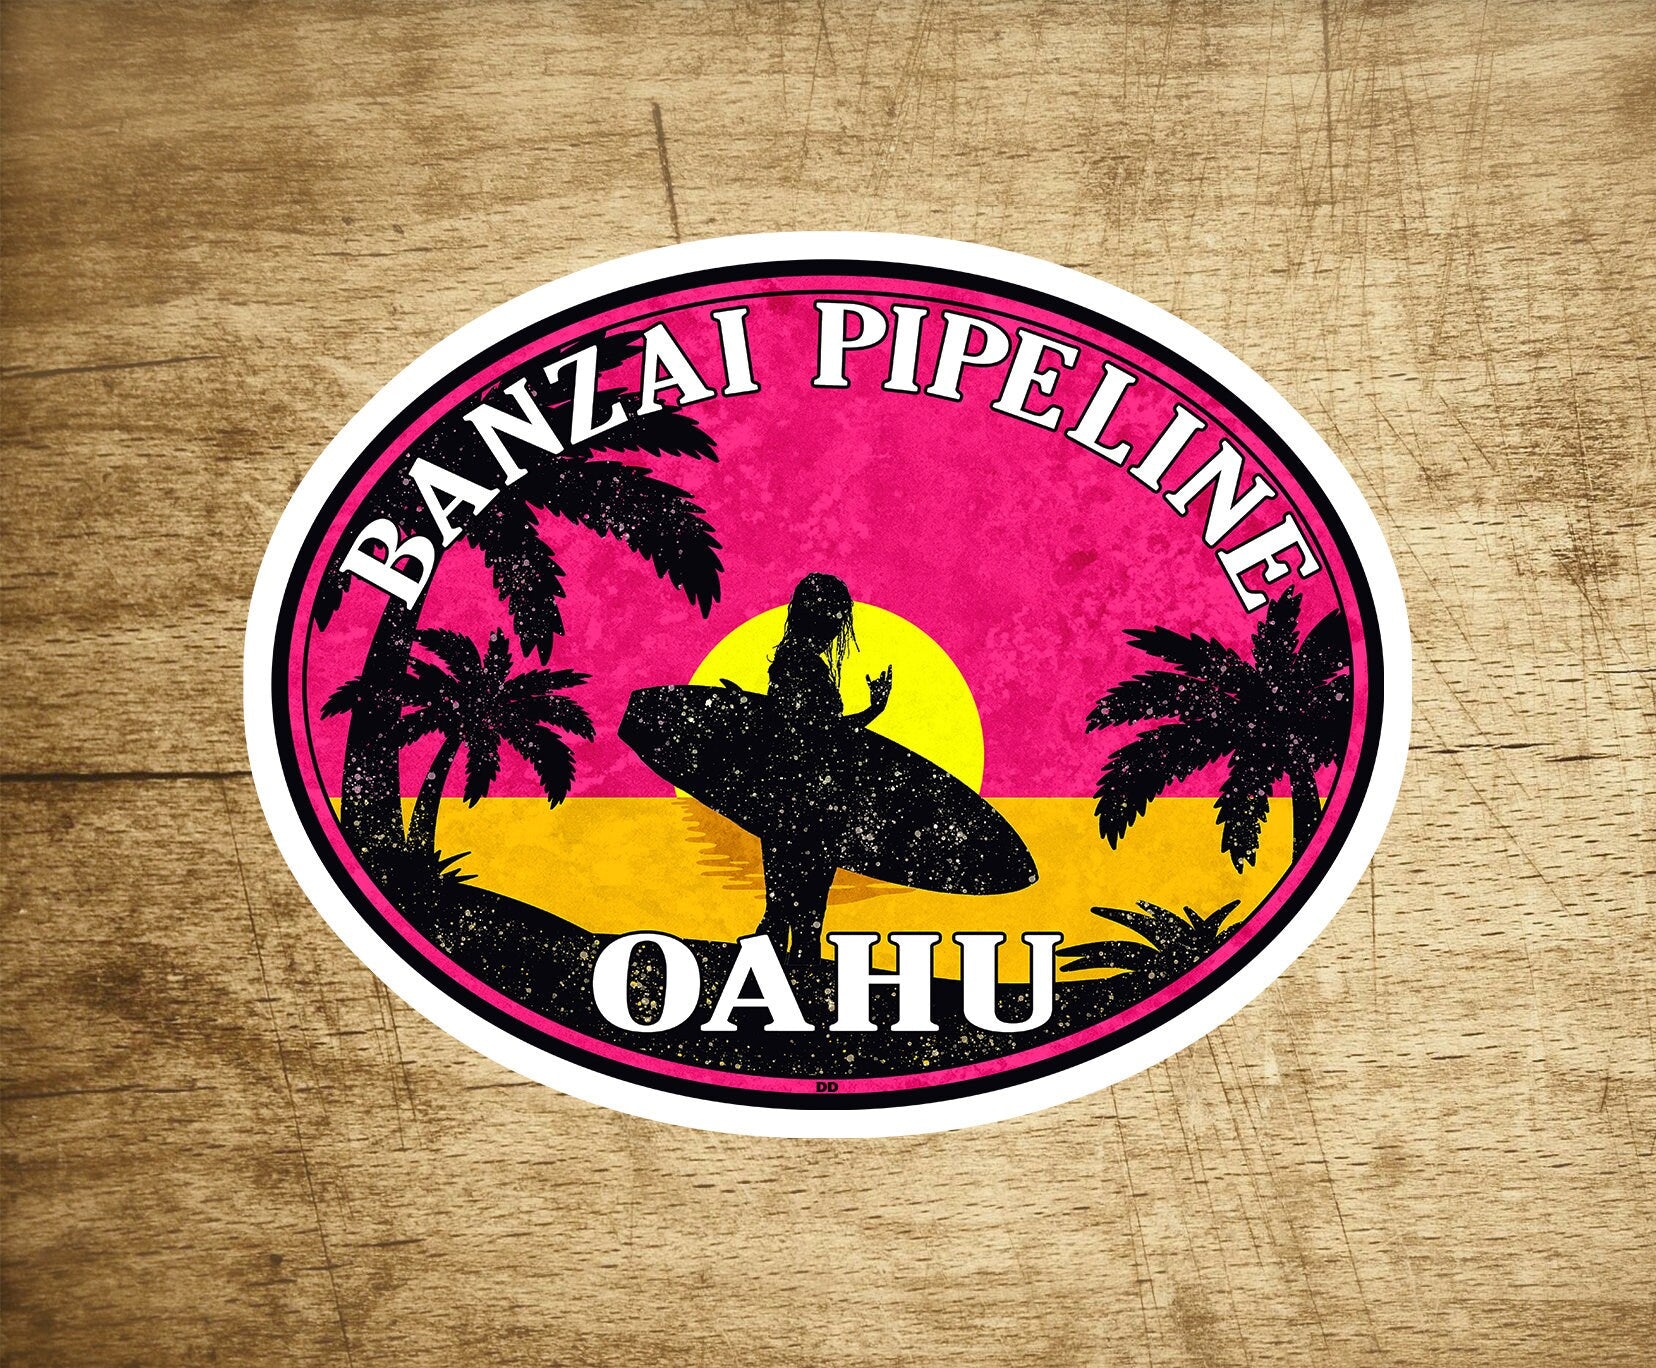 Surfing Banzai Pipeline Oahu DECAL STICKER North Shore Surf 3.6" x 2.75"